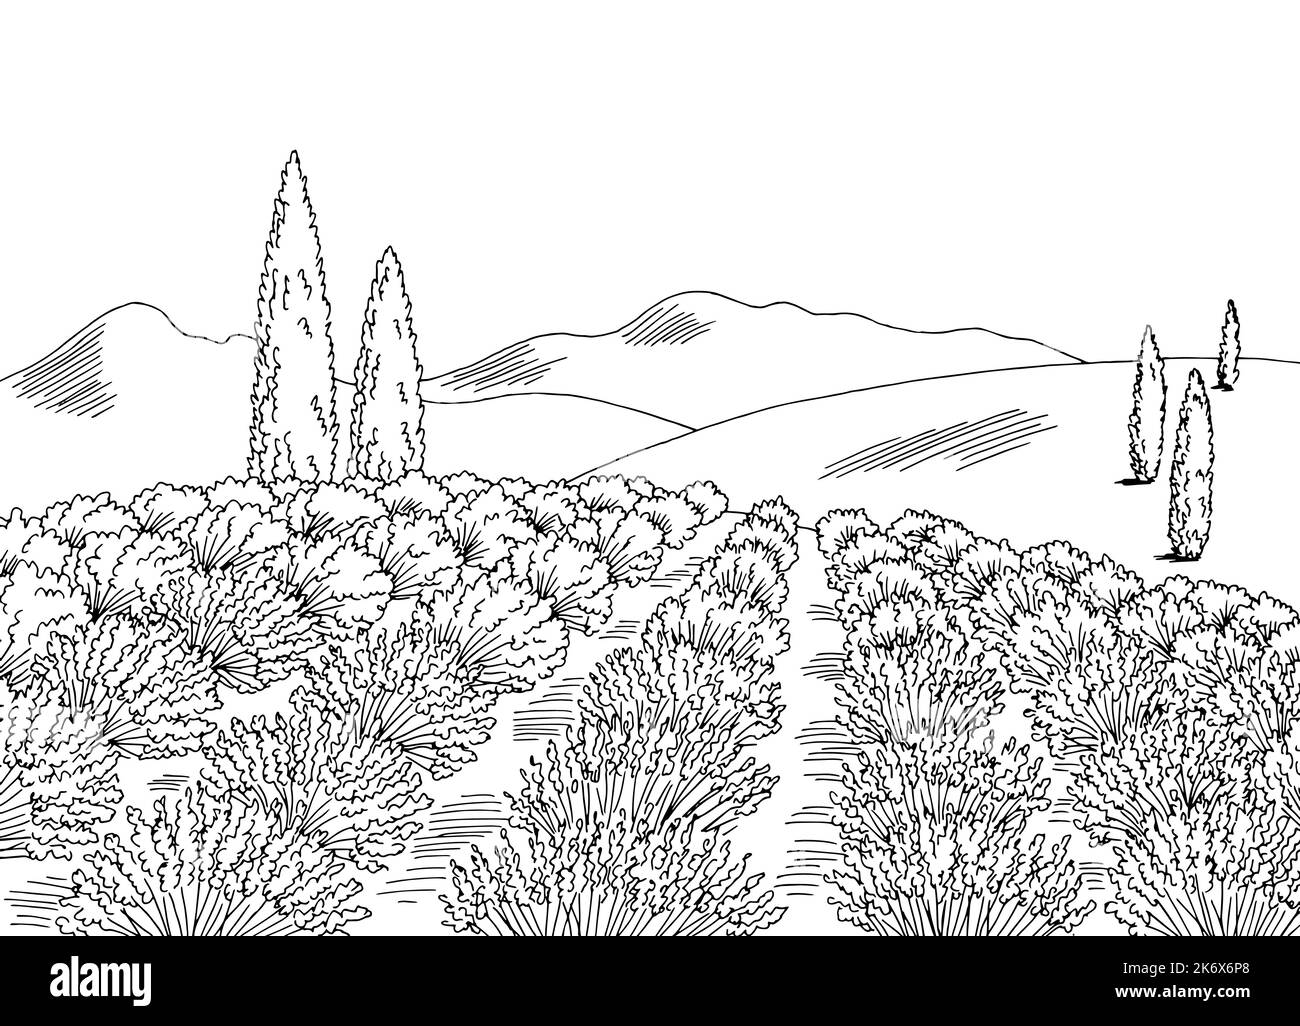 Lavendel Feld Blume Grafik schwarz weiß Landschaft Skizze Illustration Vektor Stock Vektor